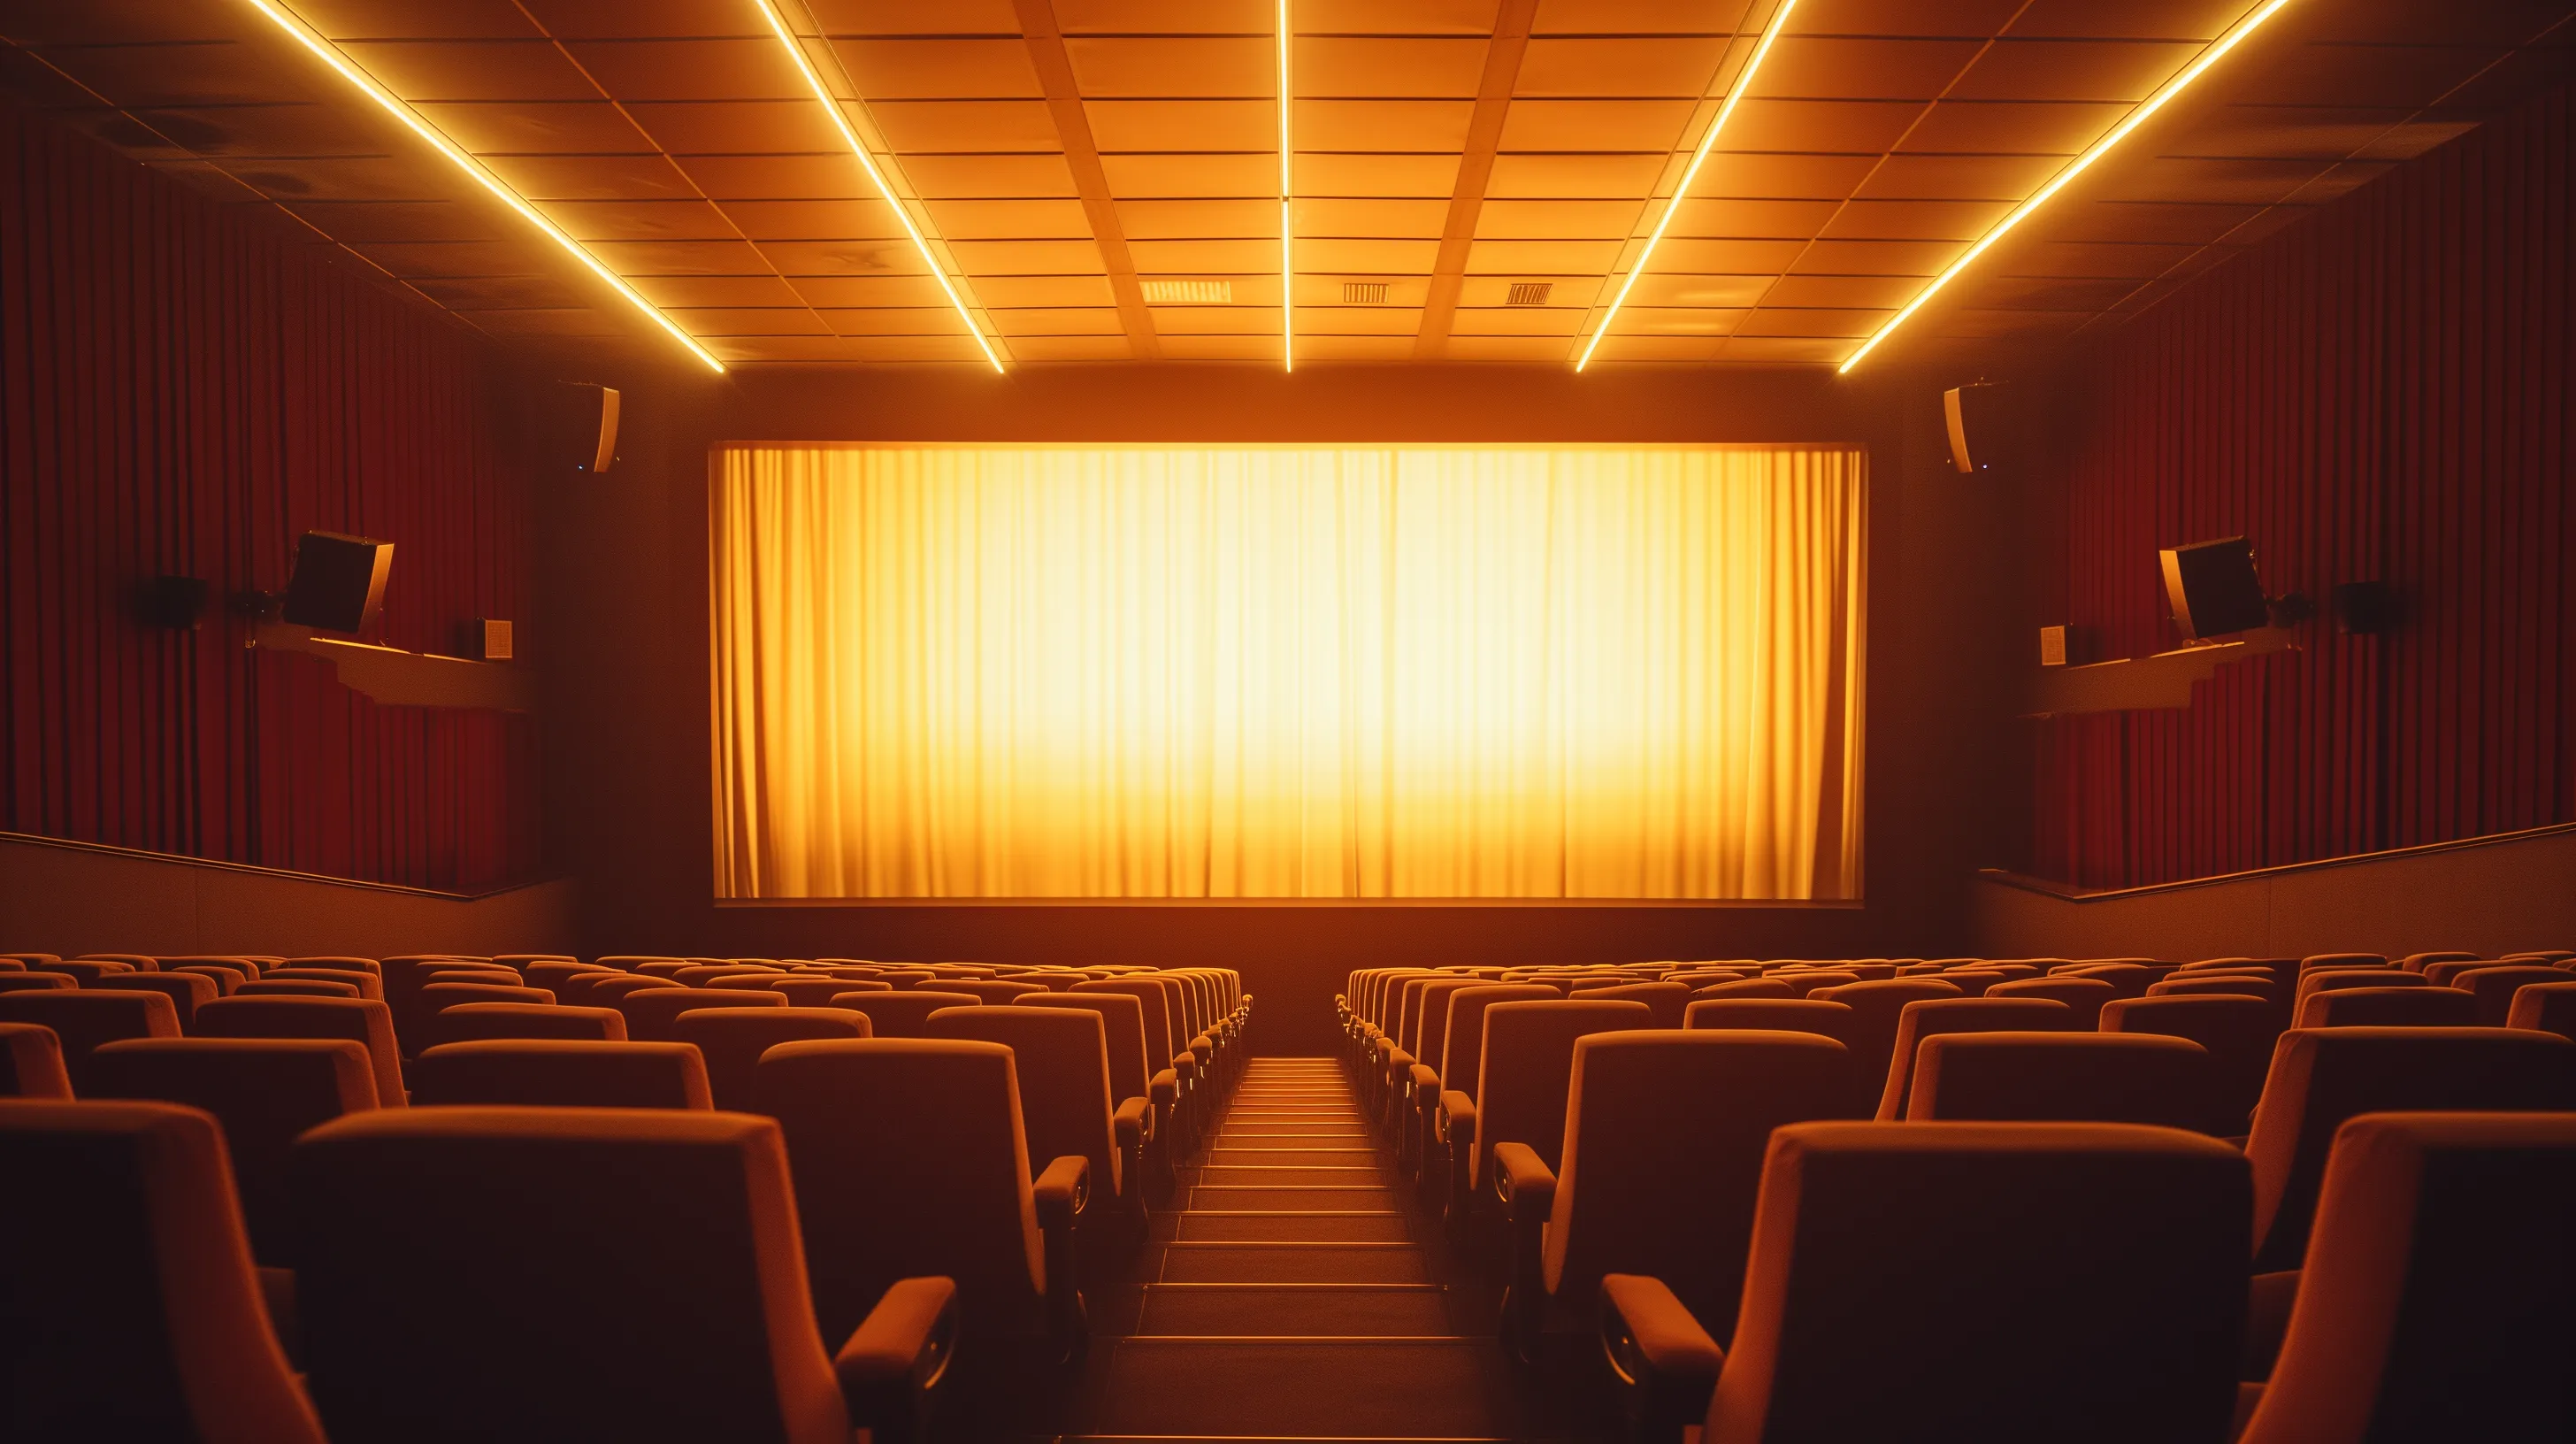 A cinema bathed in golden light.